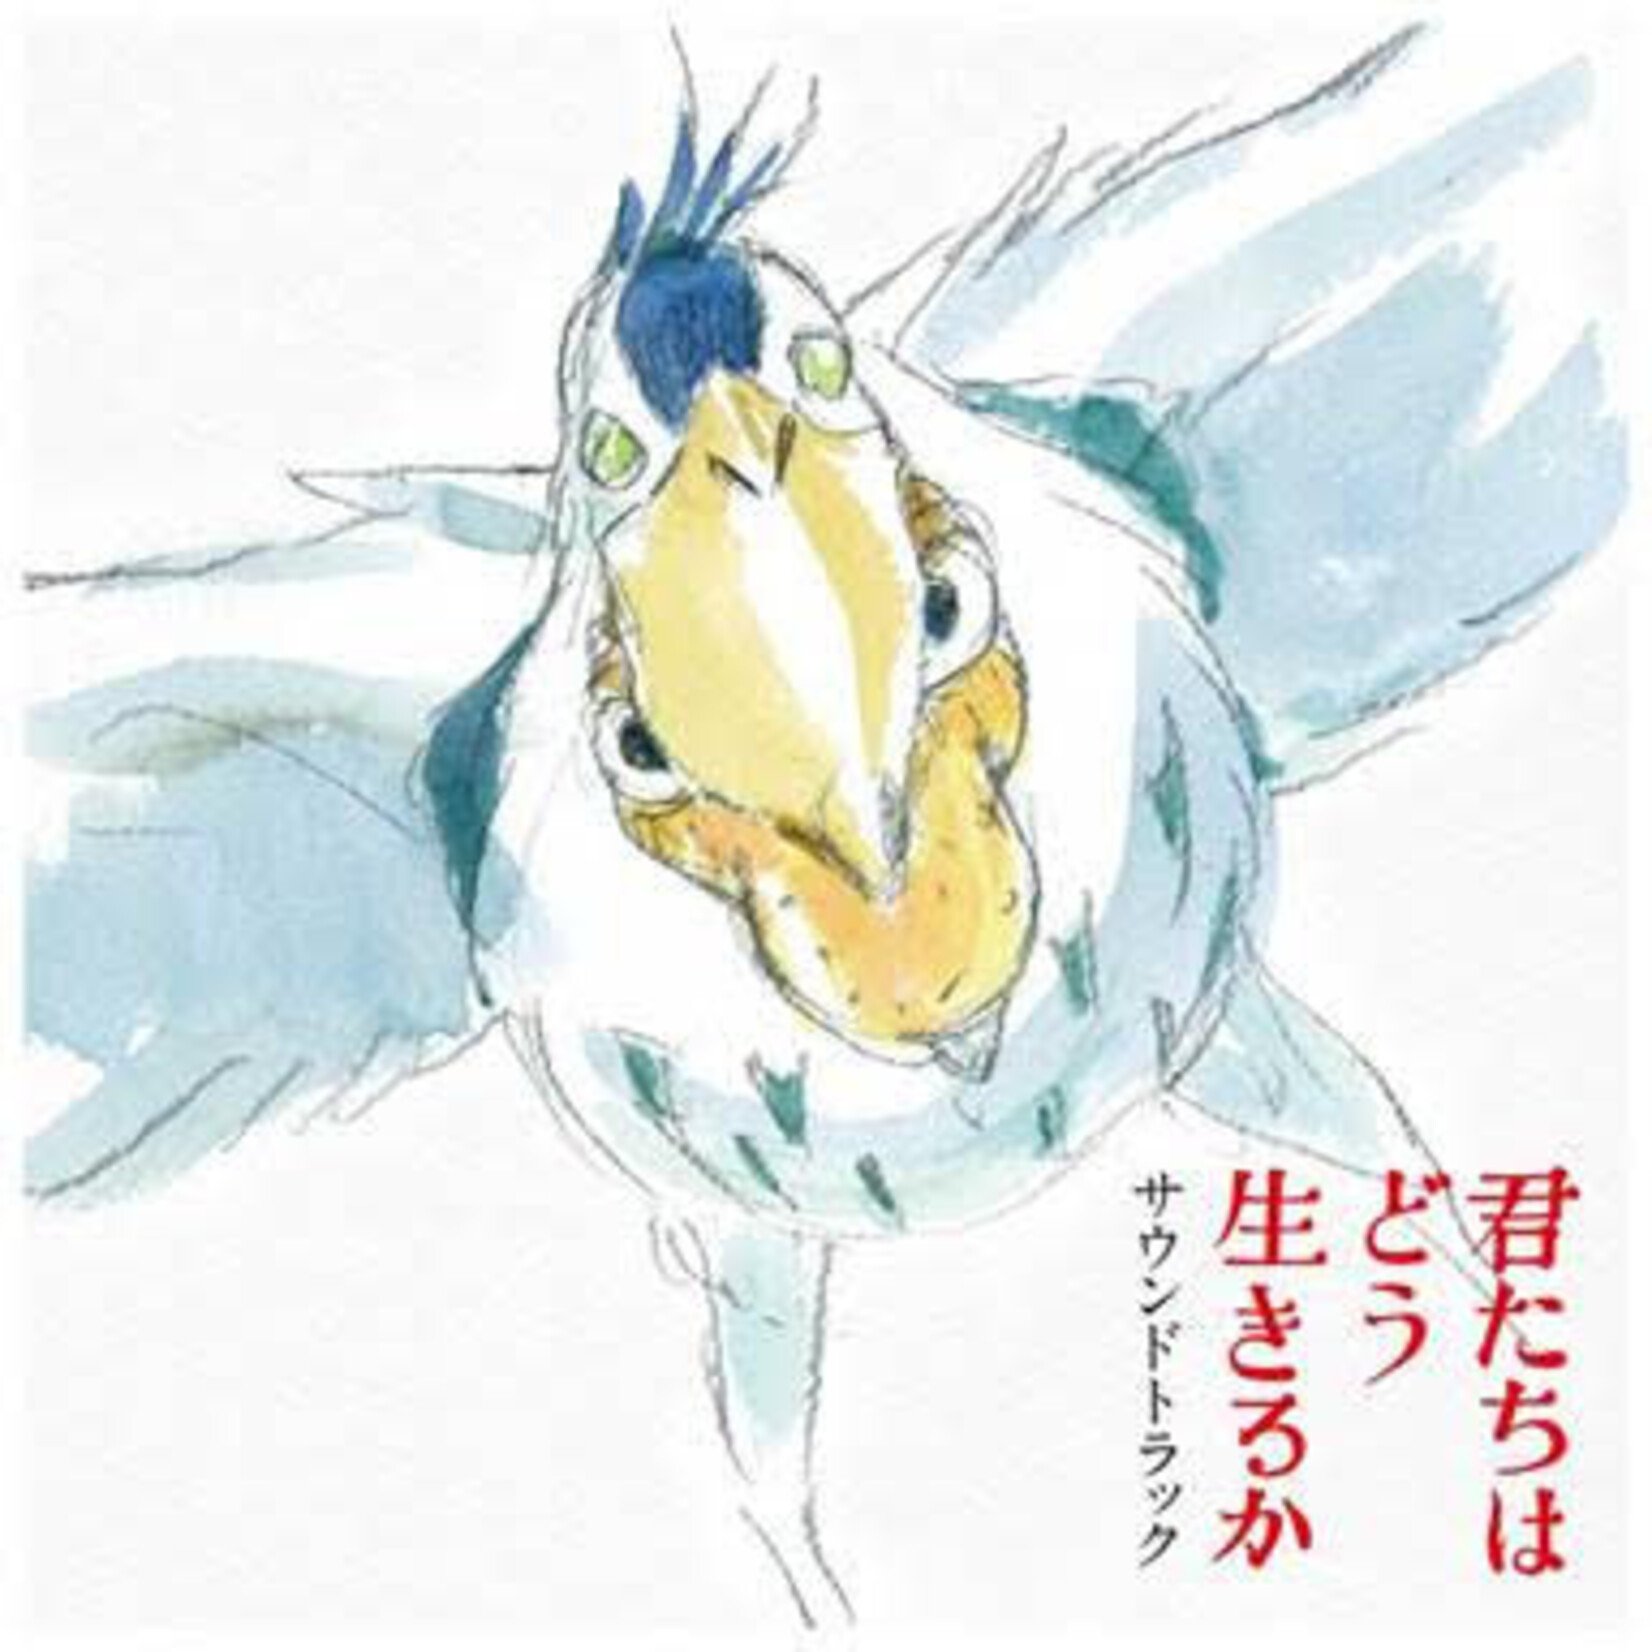 Studio Ghibli PRE-ORDER Joe Hisaishi - The Boy And The Heron OST (2LP)